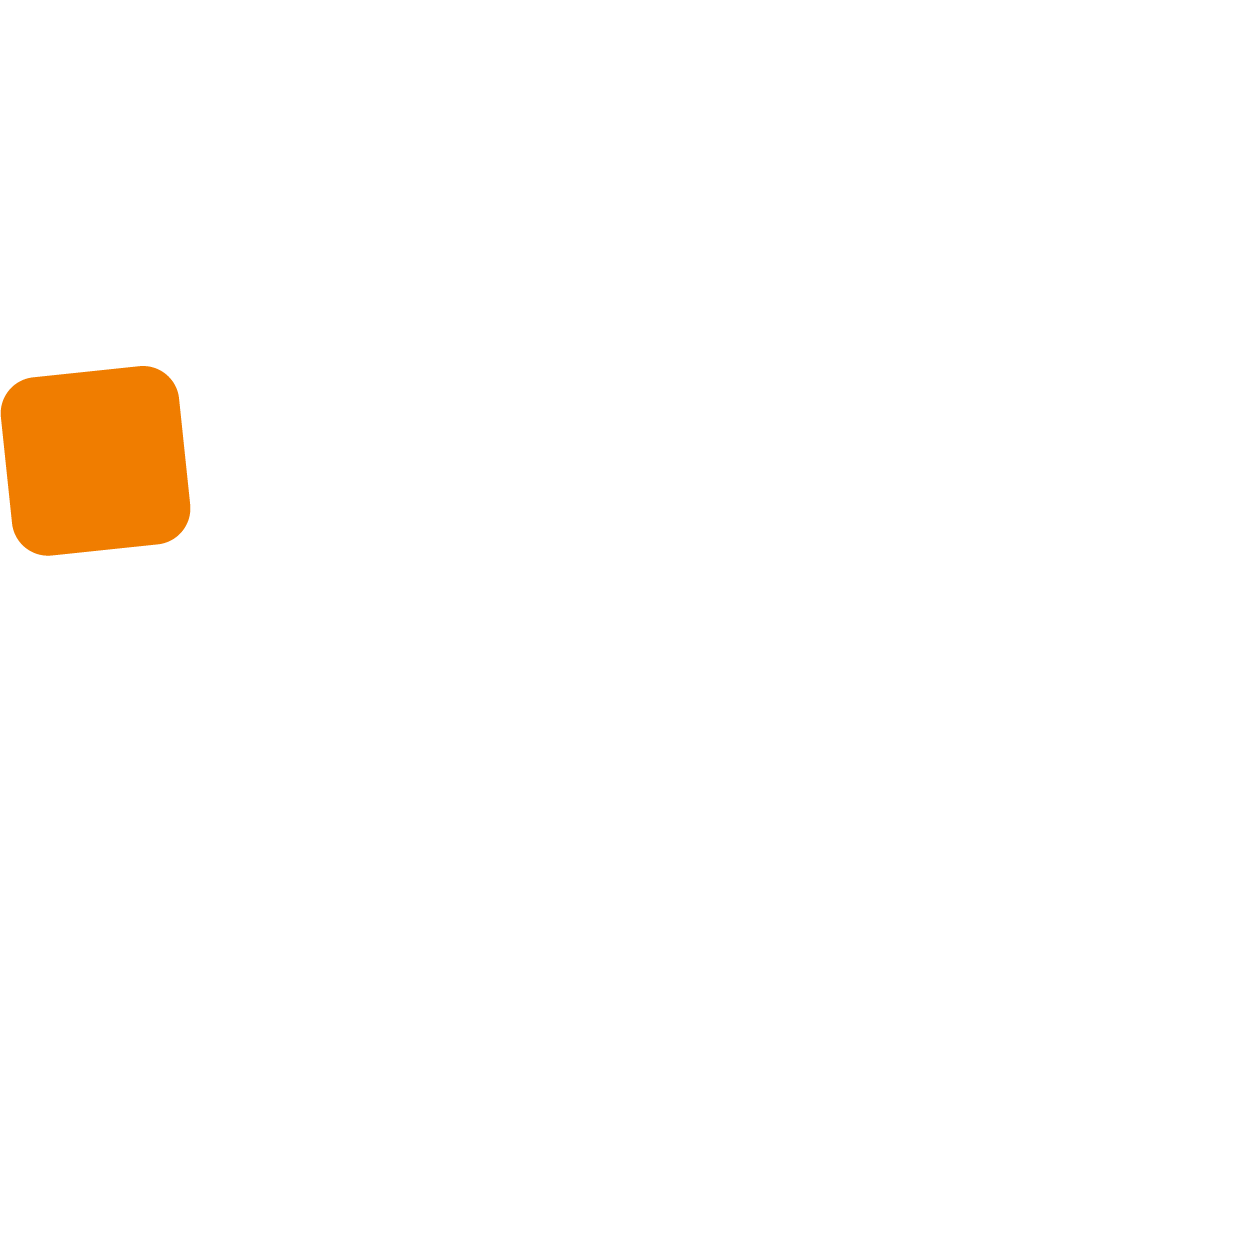 GIB